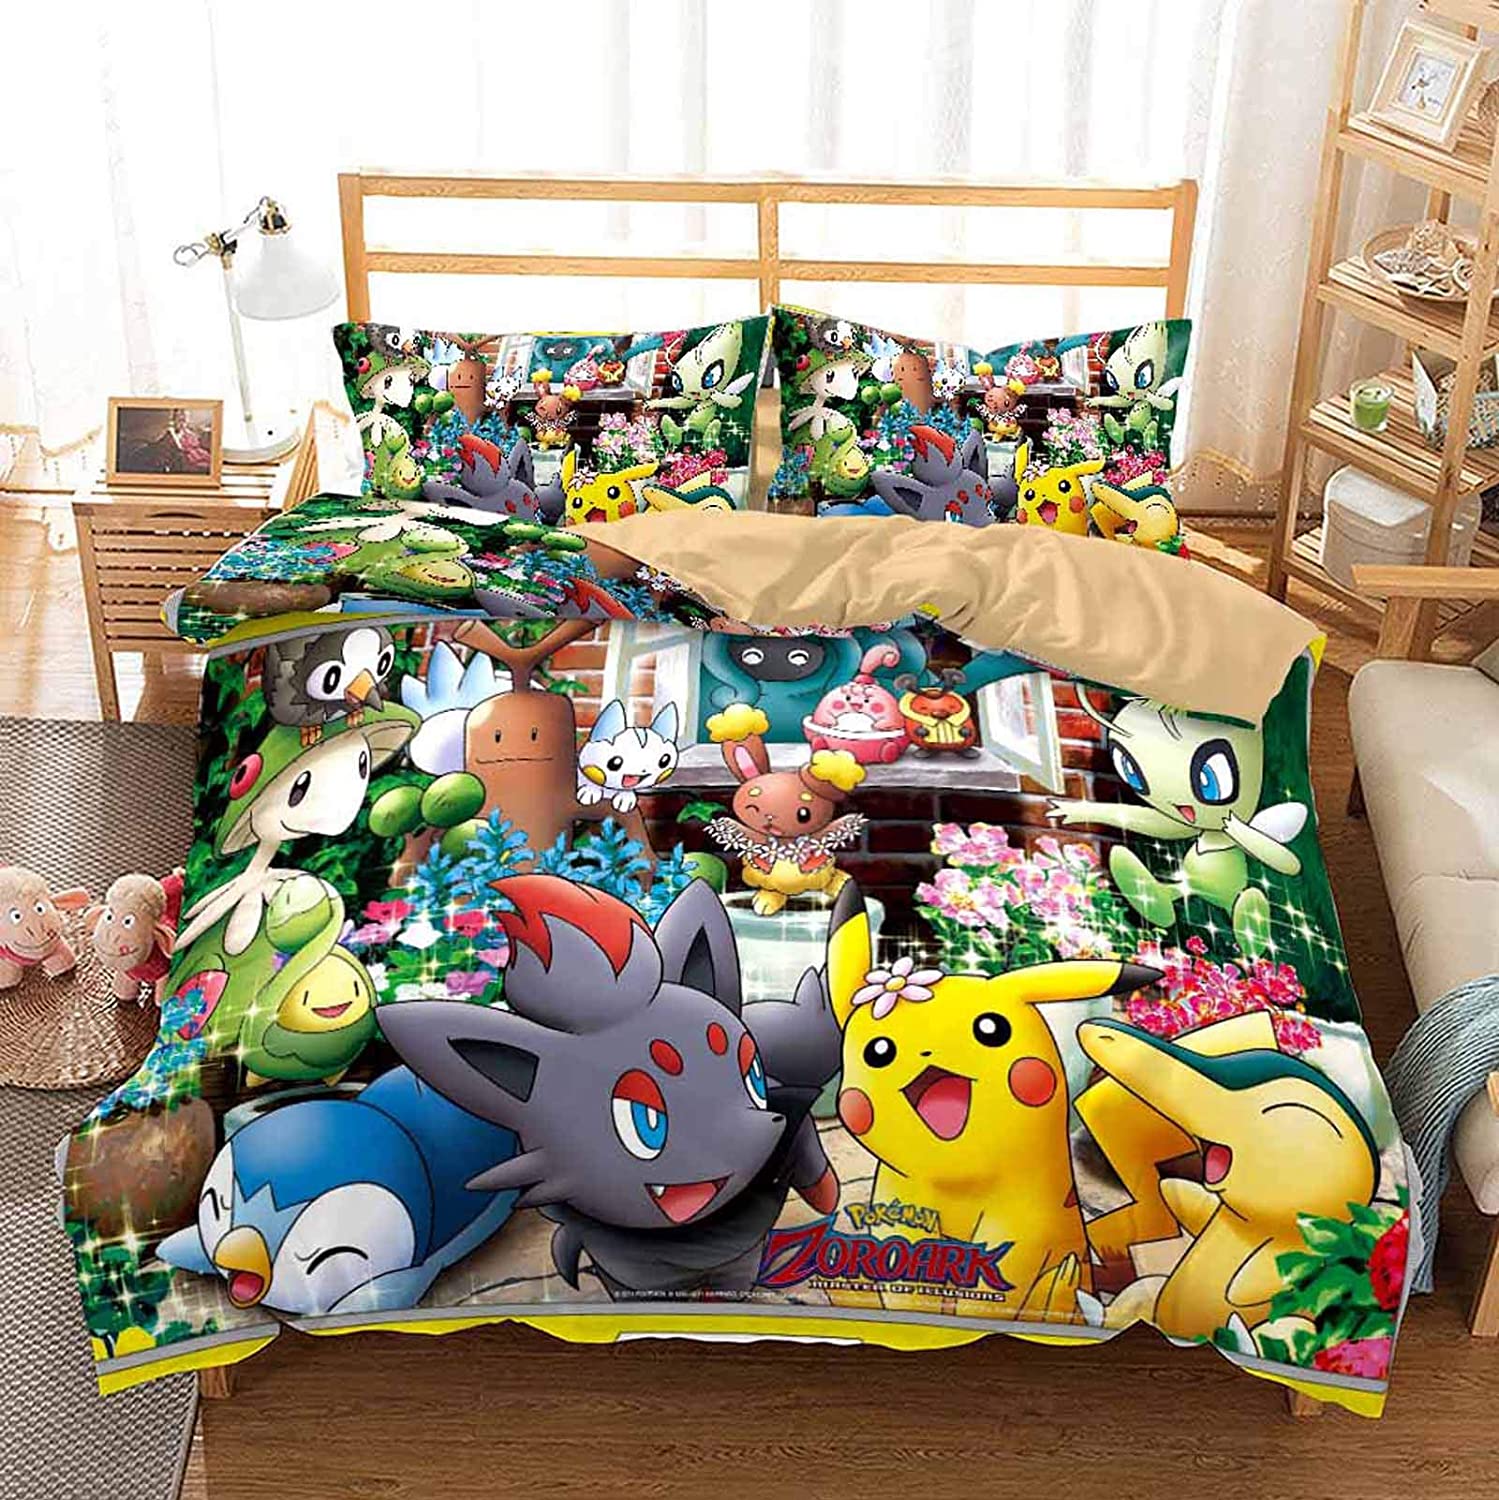 Amazon.com: SOEWBBER Colorful Pokemon Bedding Set Full Size Kawaii ...